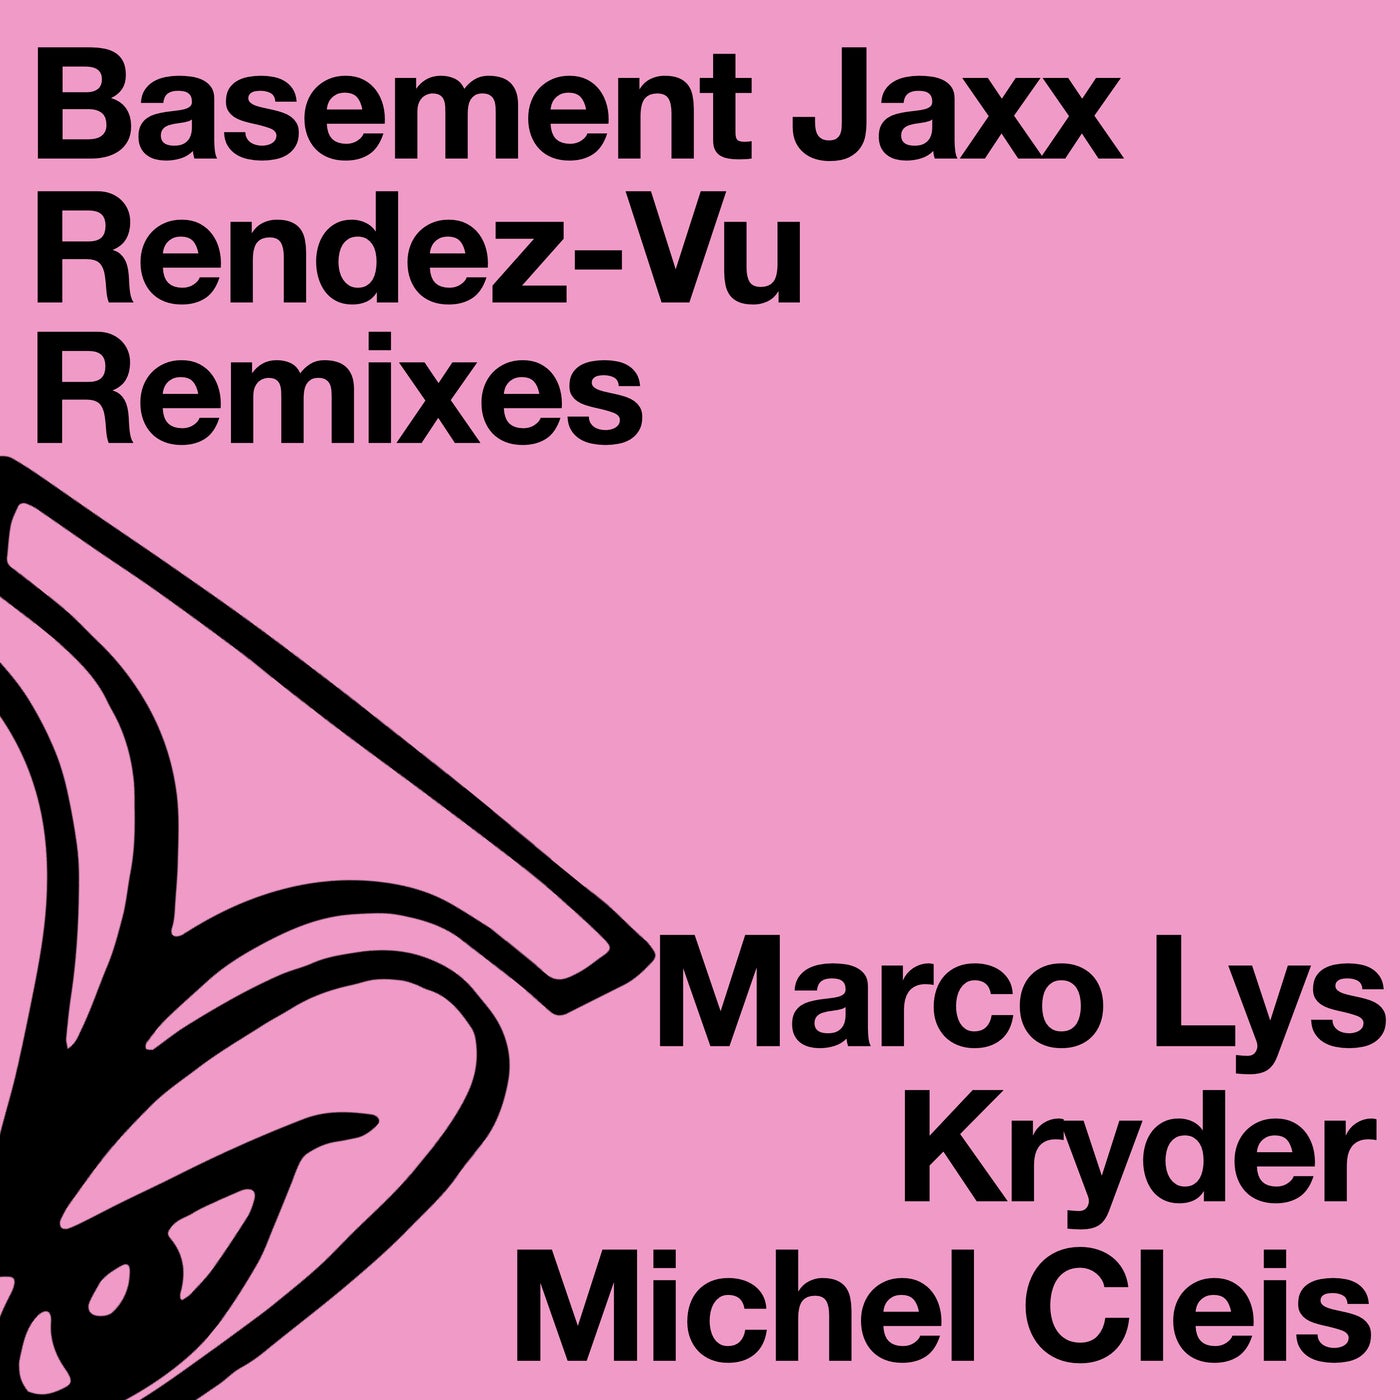 Basement Jaxx - Rendez-Vu (Marco Lys Remix)